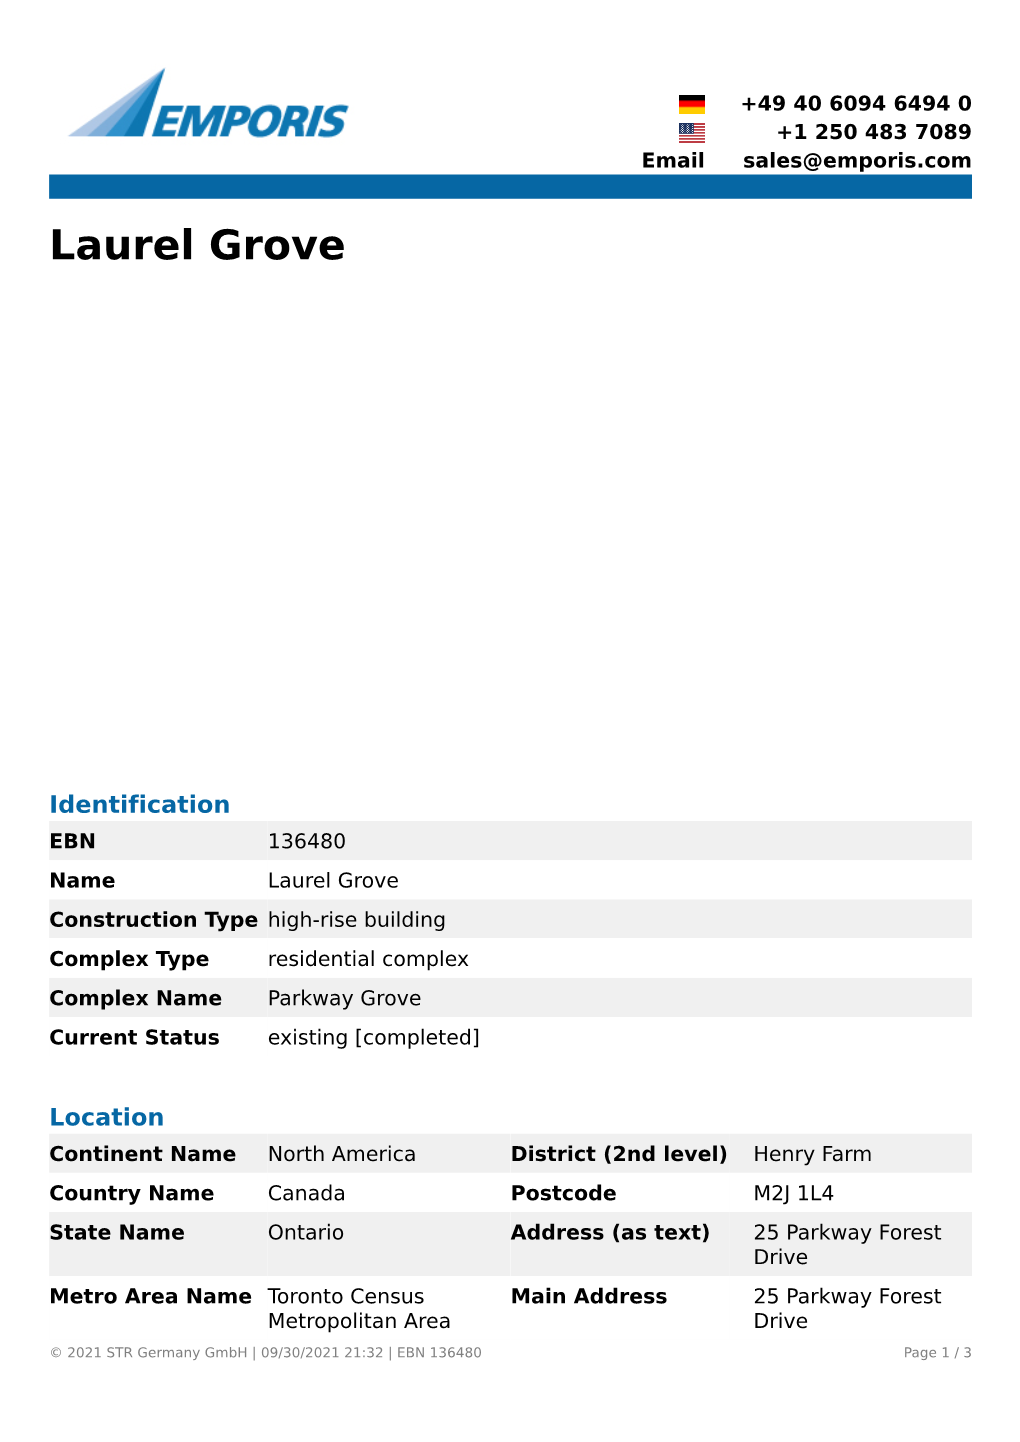 Laurel Grove